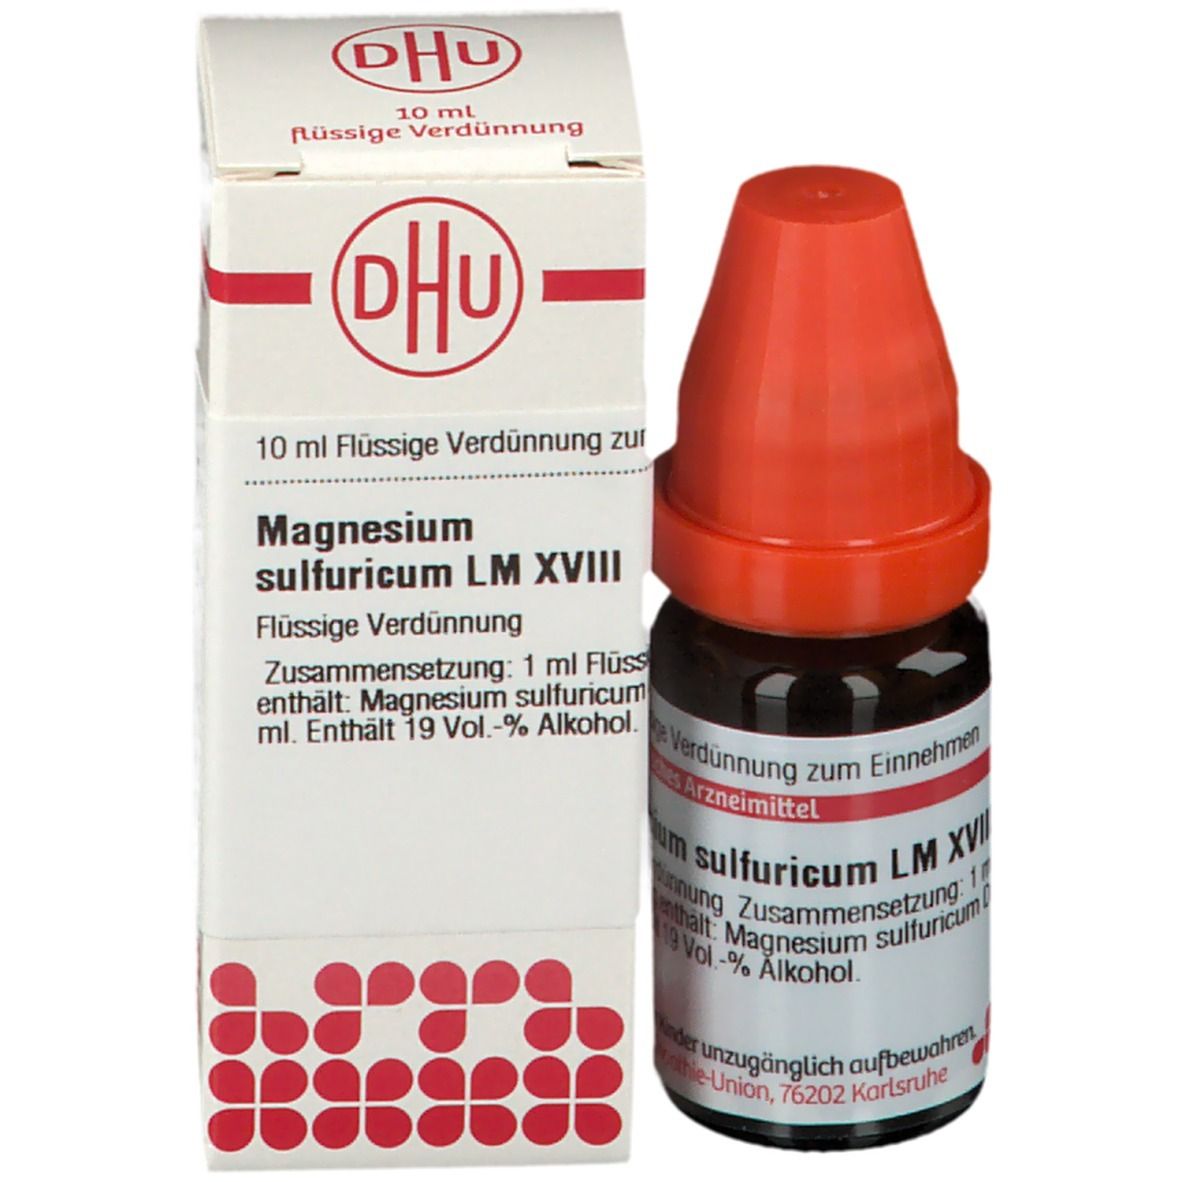 DHU Magnesium Sulfuricum LM XVIII